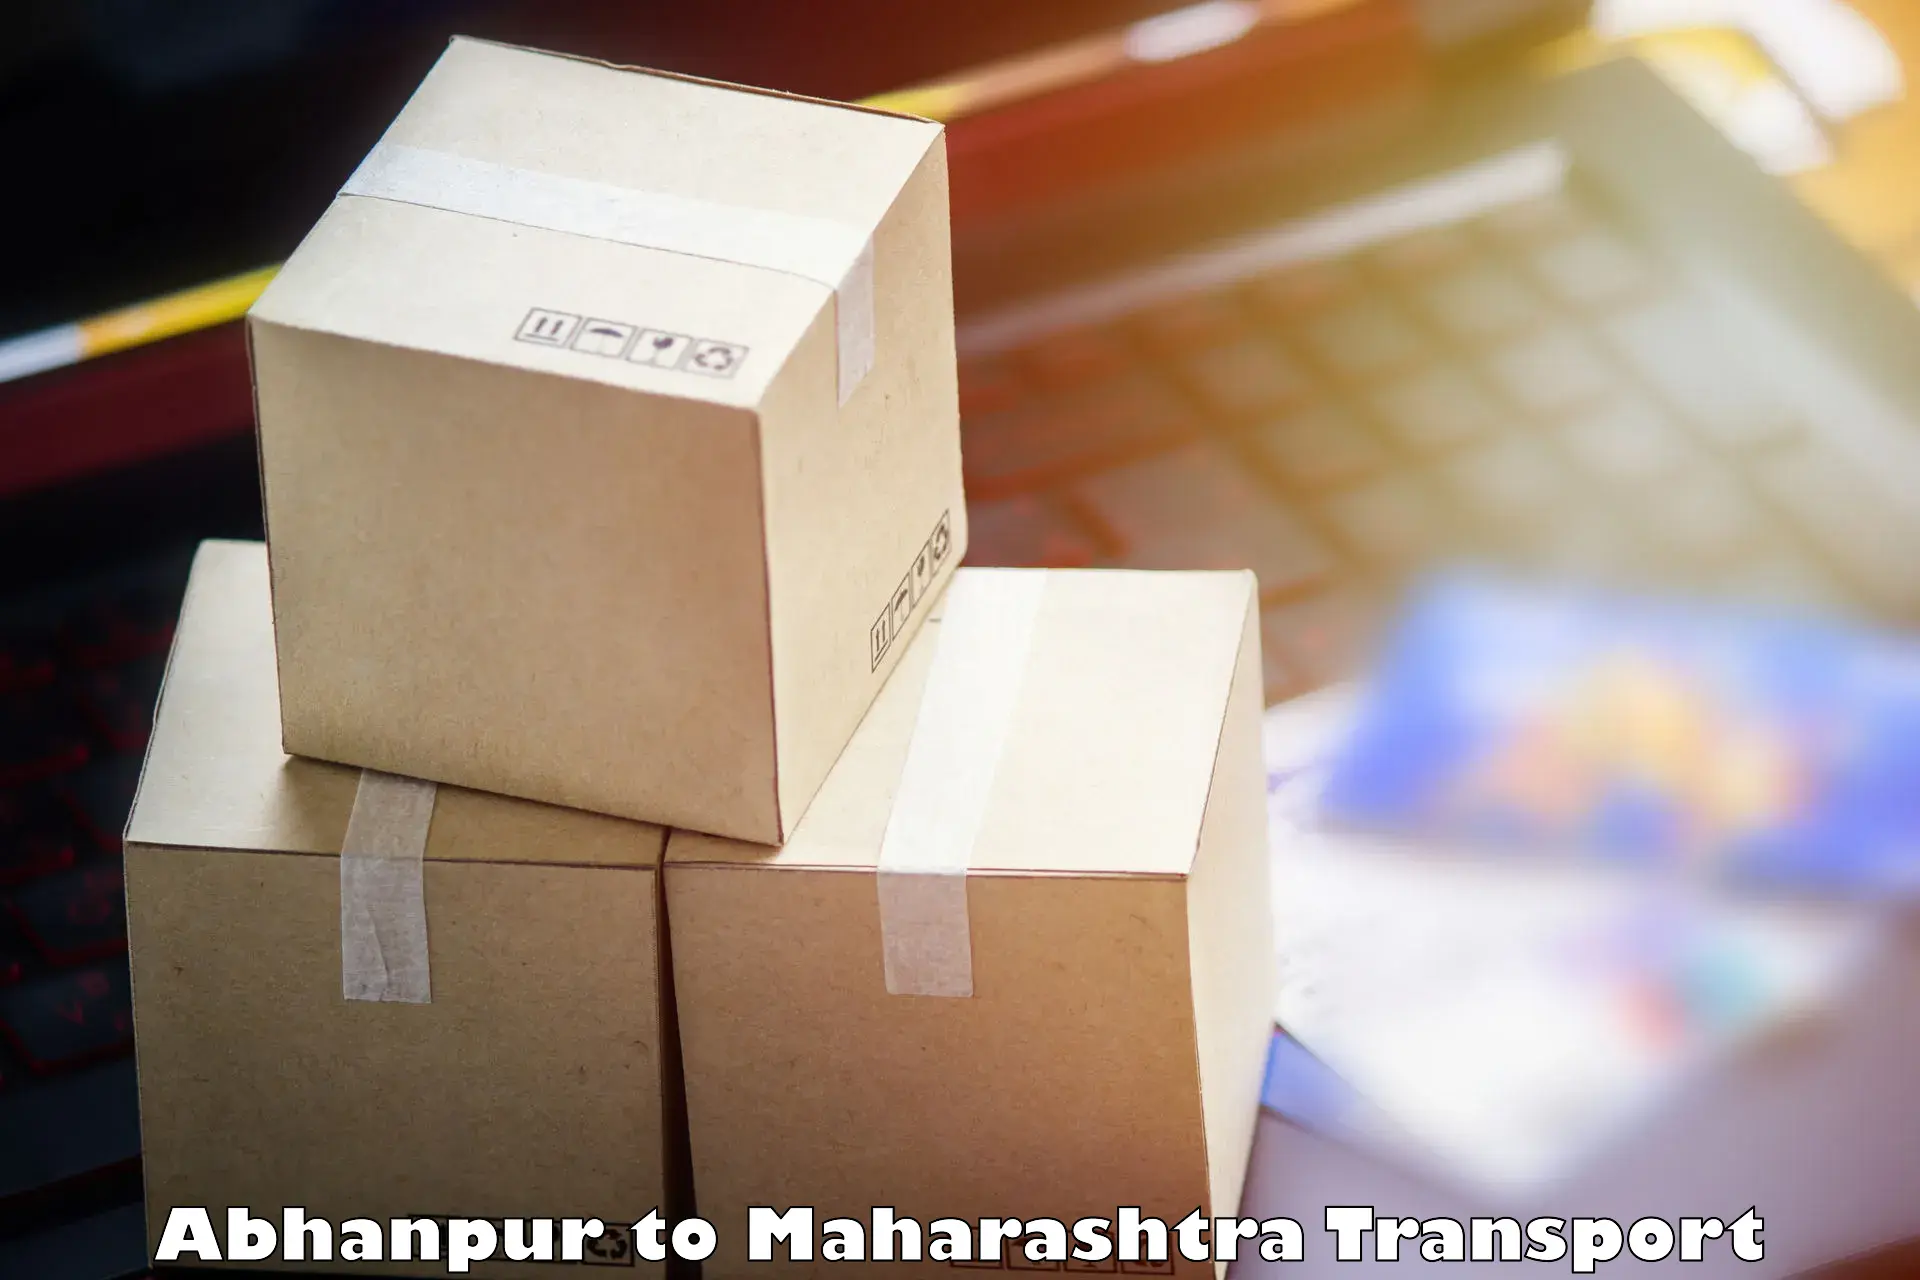 Truck transport companies in India Abhanpur to Ashta Sangli